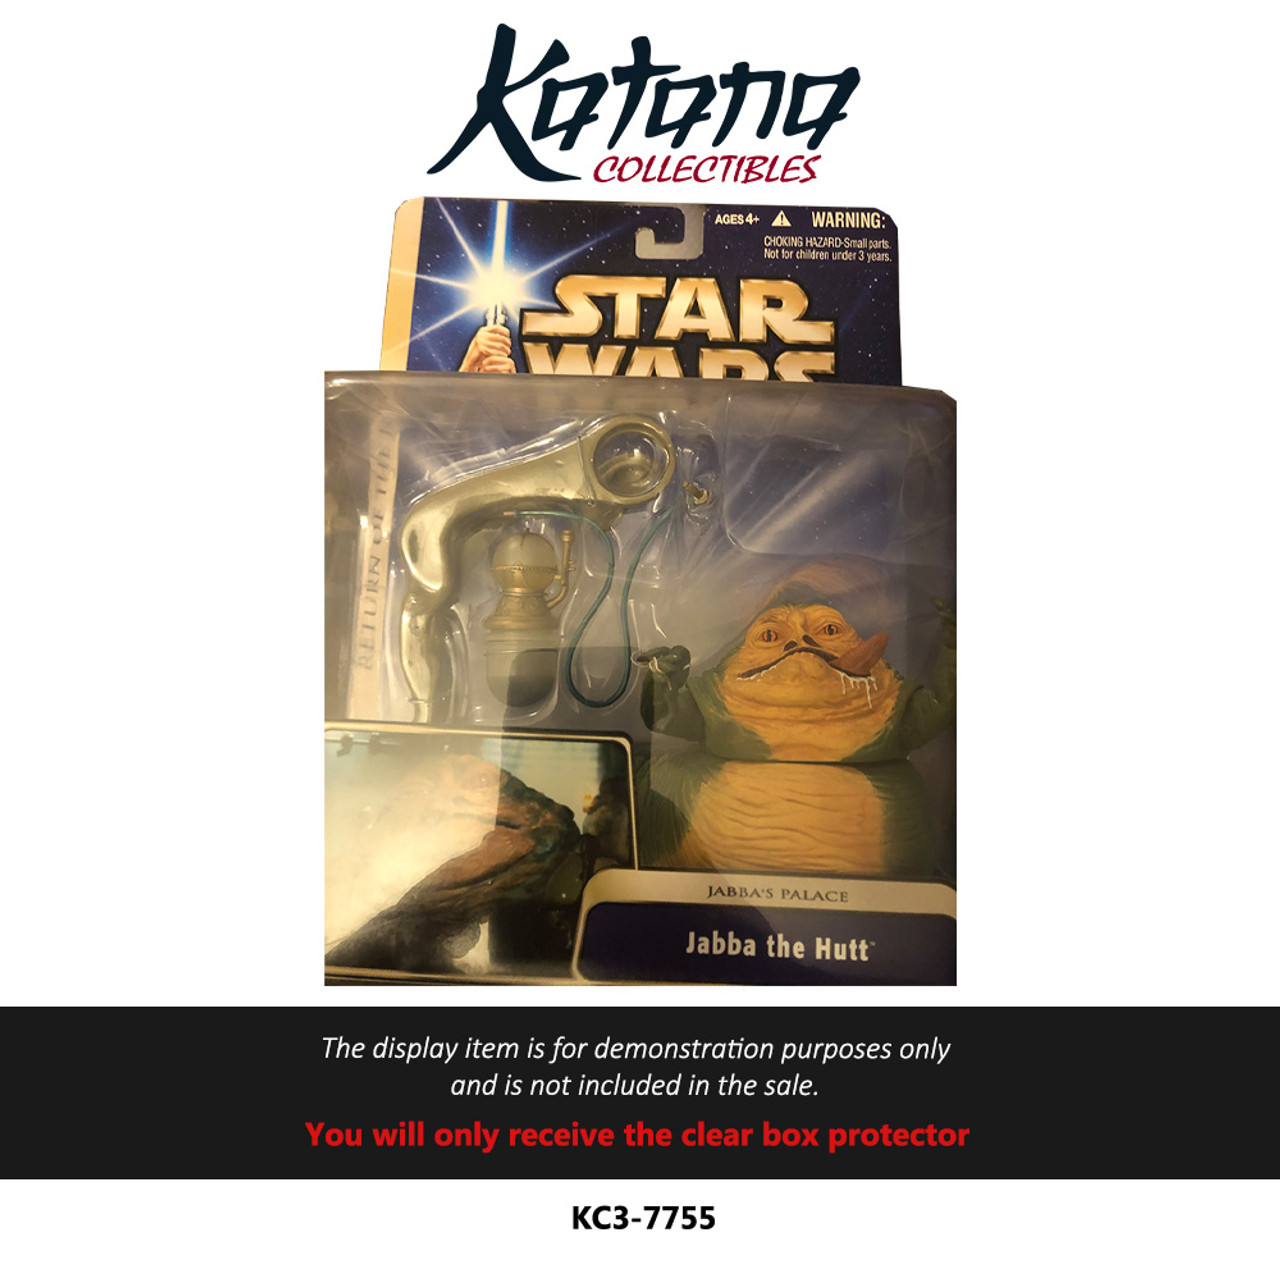 Katana Collectibles Protector For Star Wars Jabba the Hutt